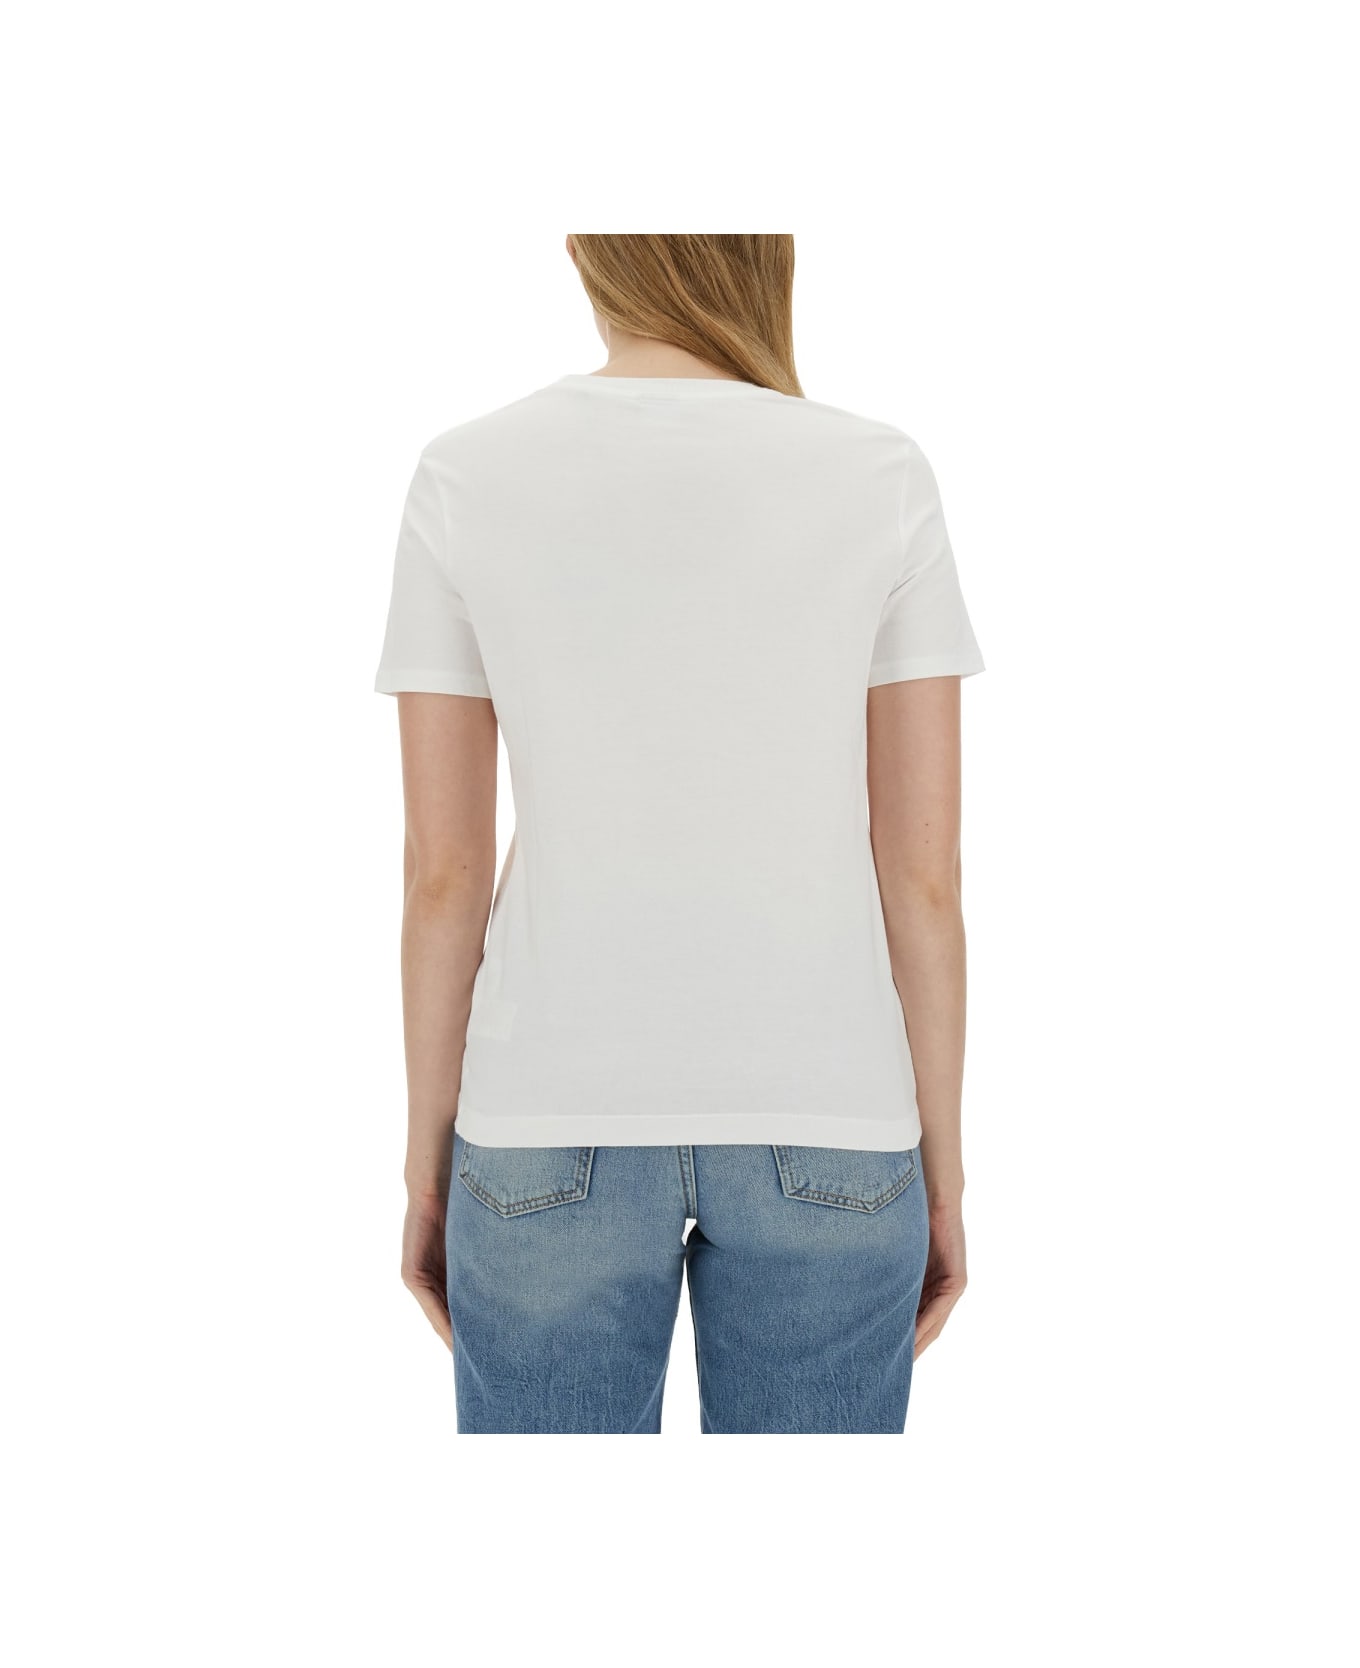 Paul Smith Daisy T-shirt - White Tシャツ